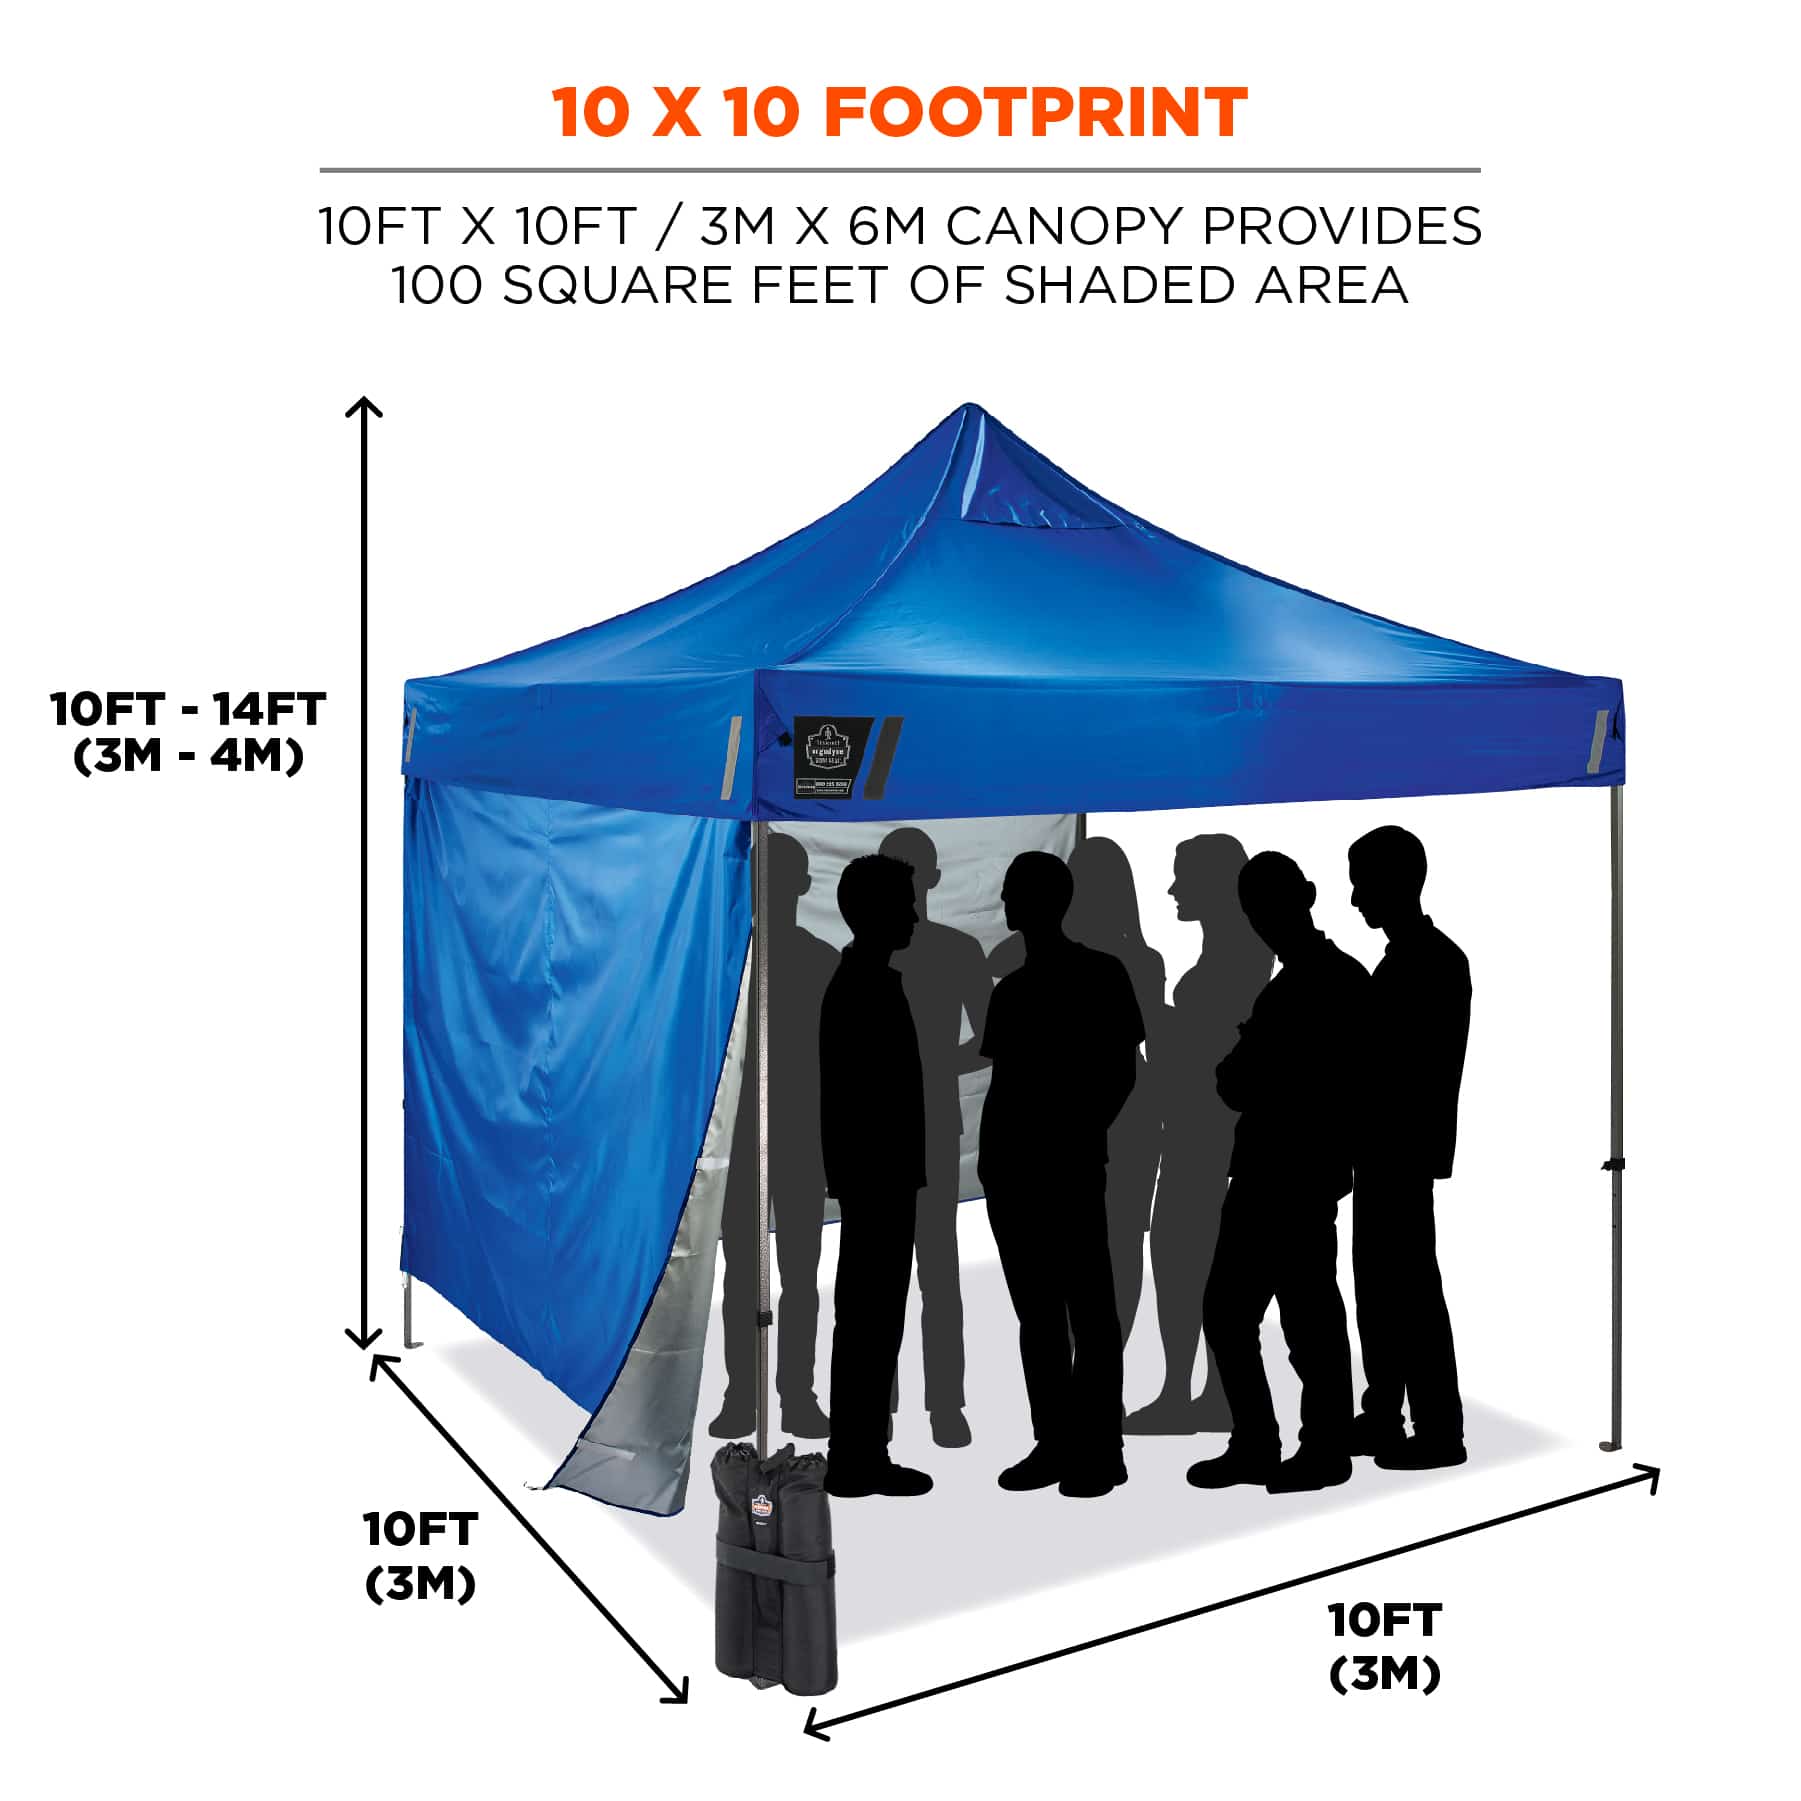 Heavy-Duty Pop-Up Tent Kit - 10ft x 10ft